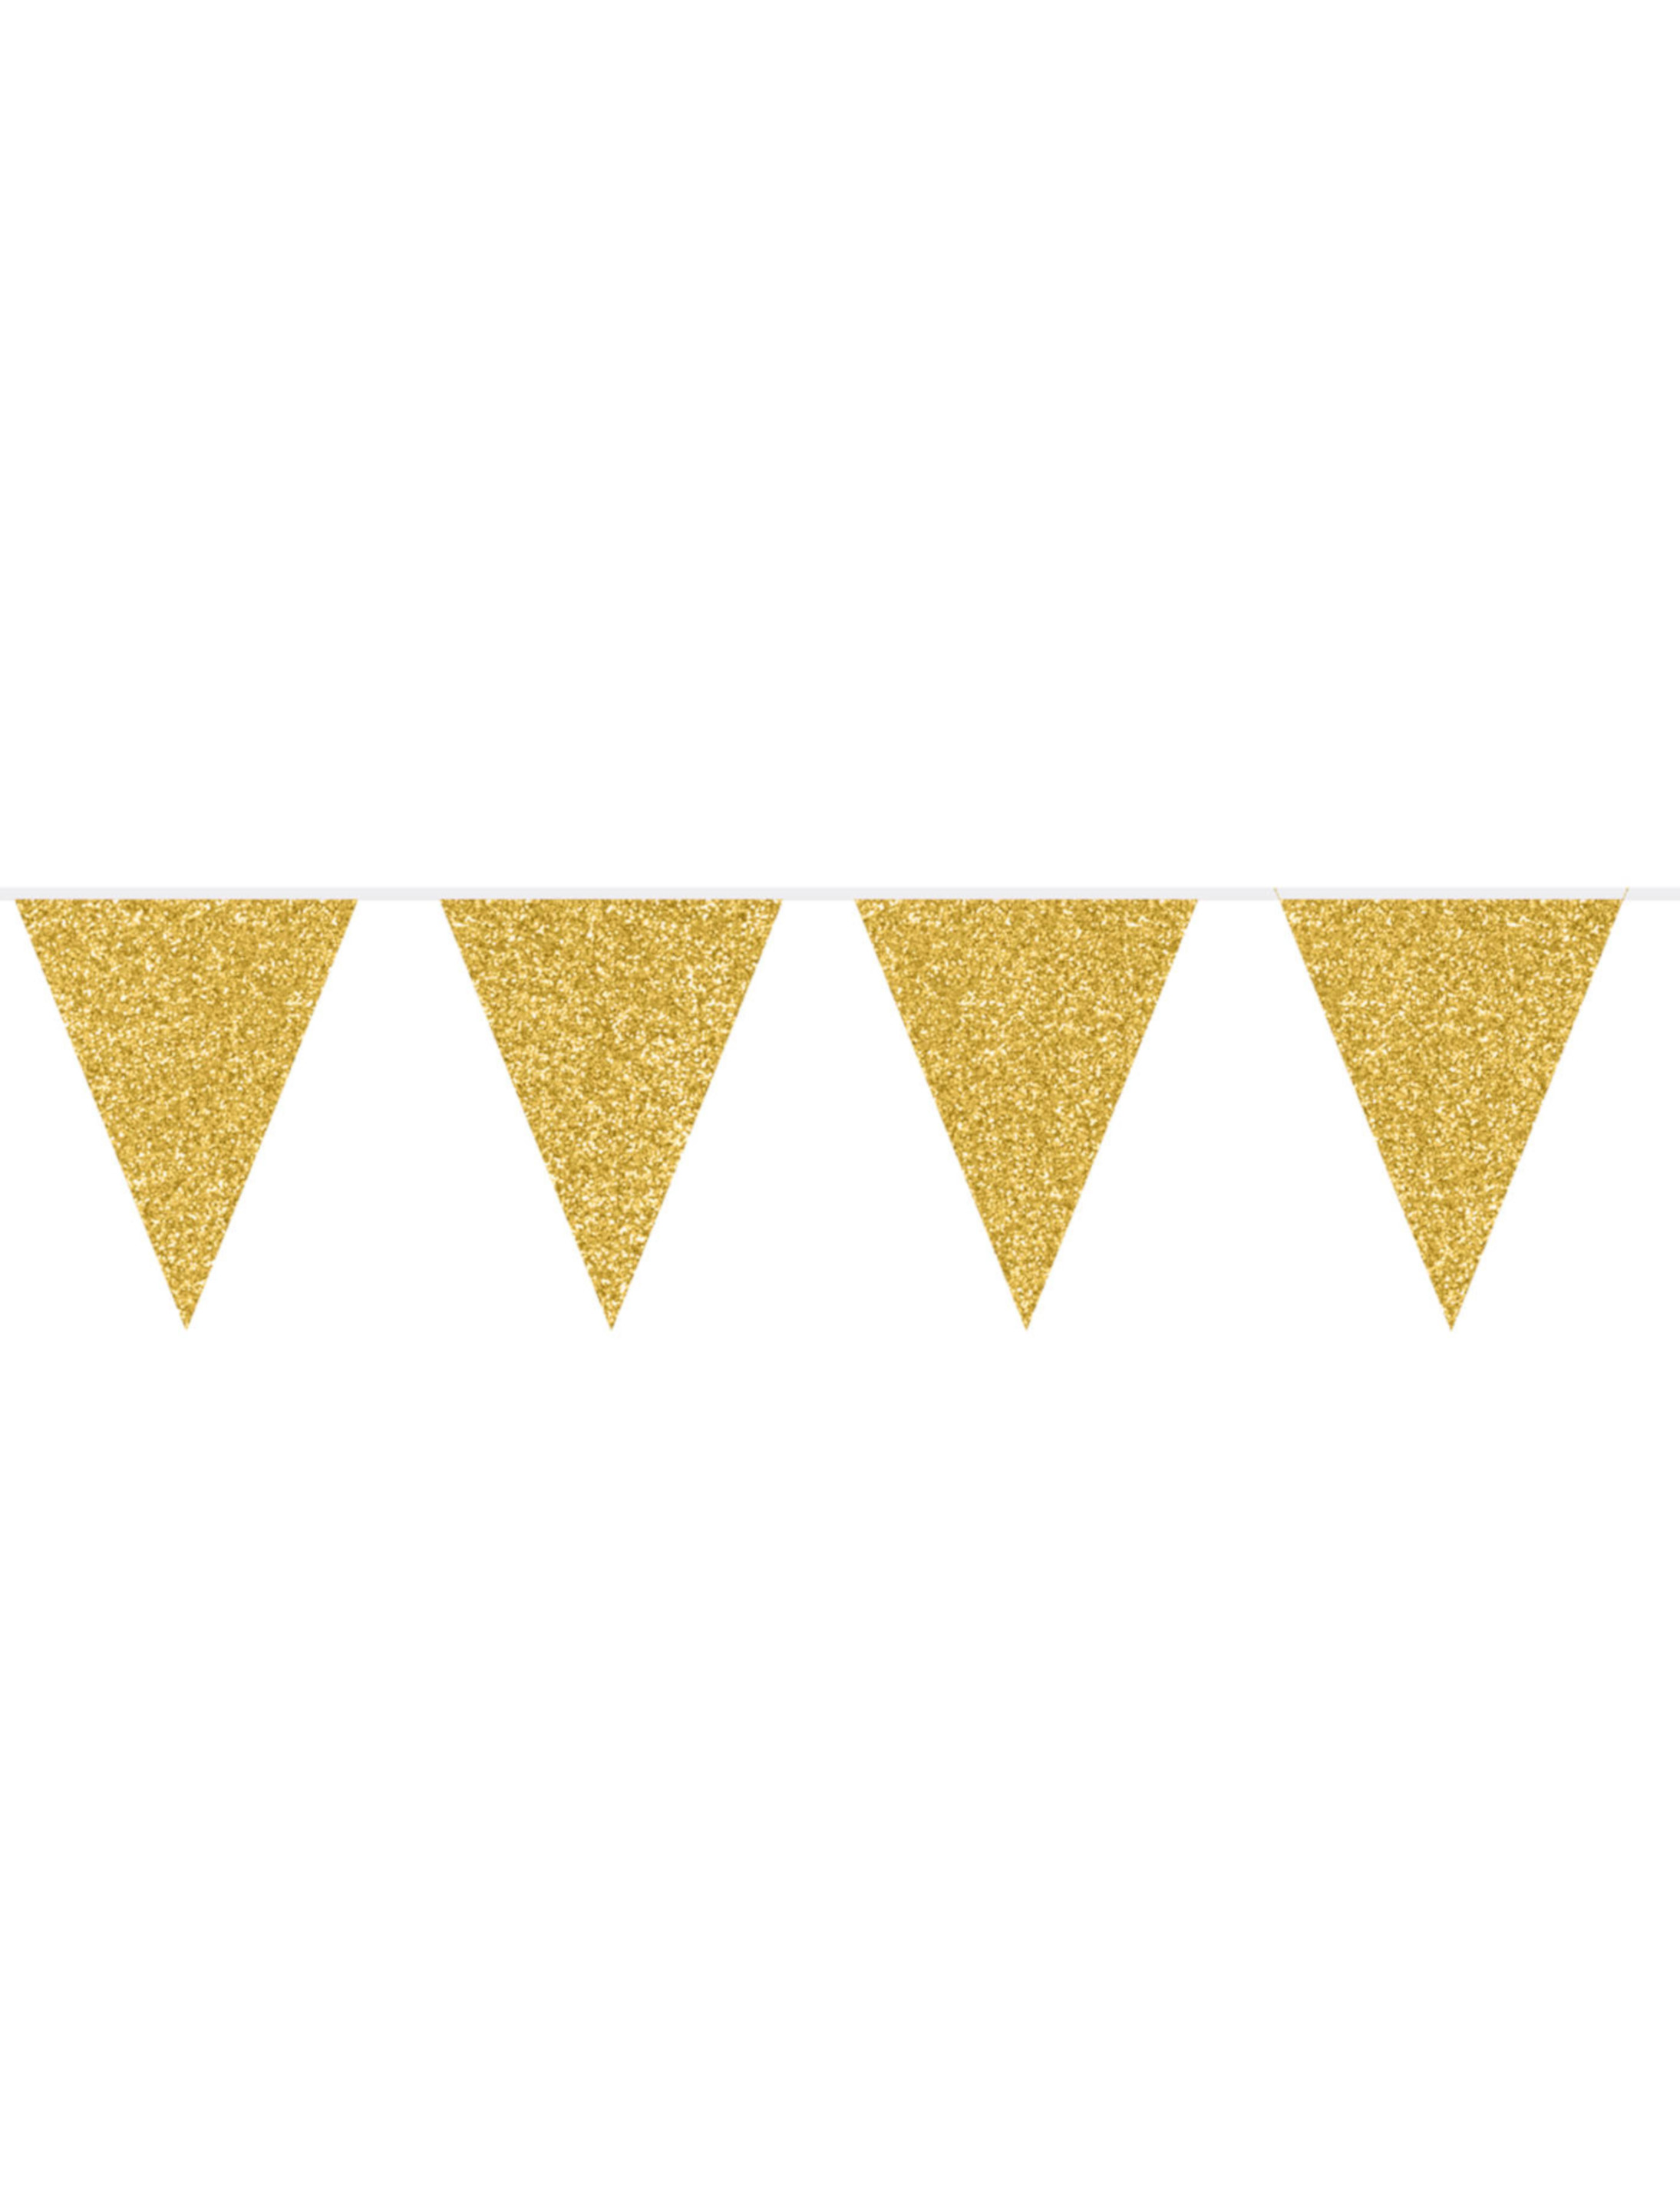 Wimpelkette Glitter gold 6m